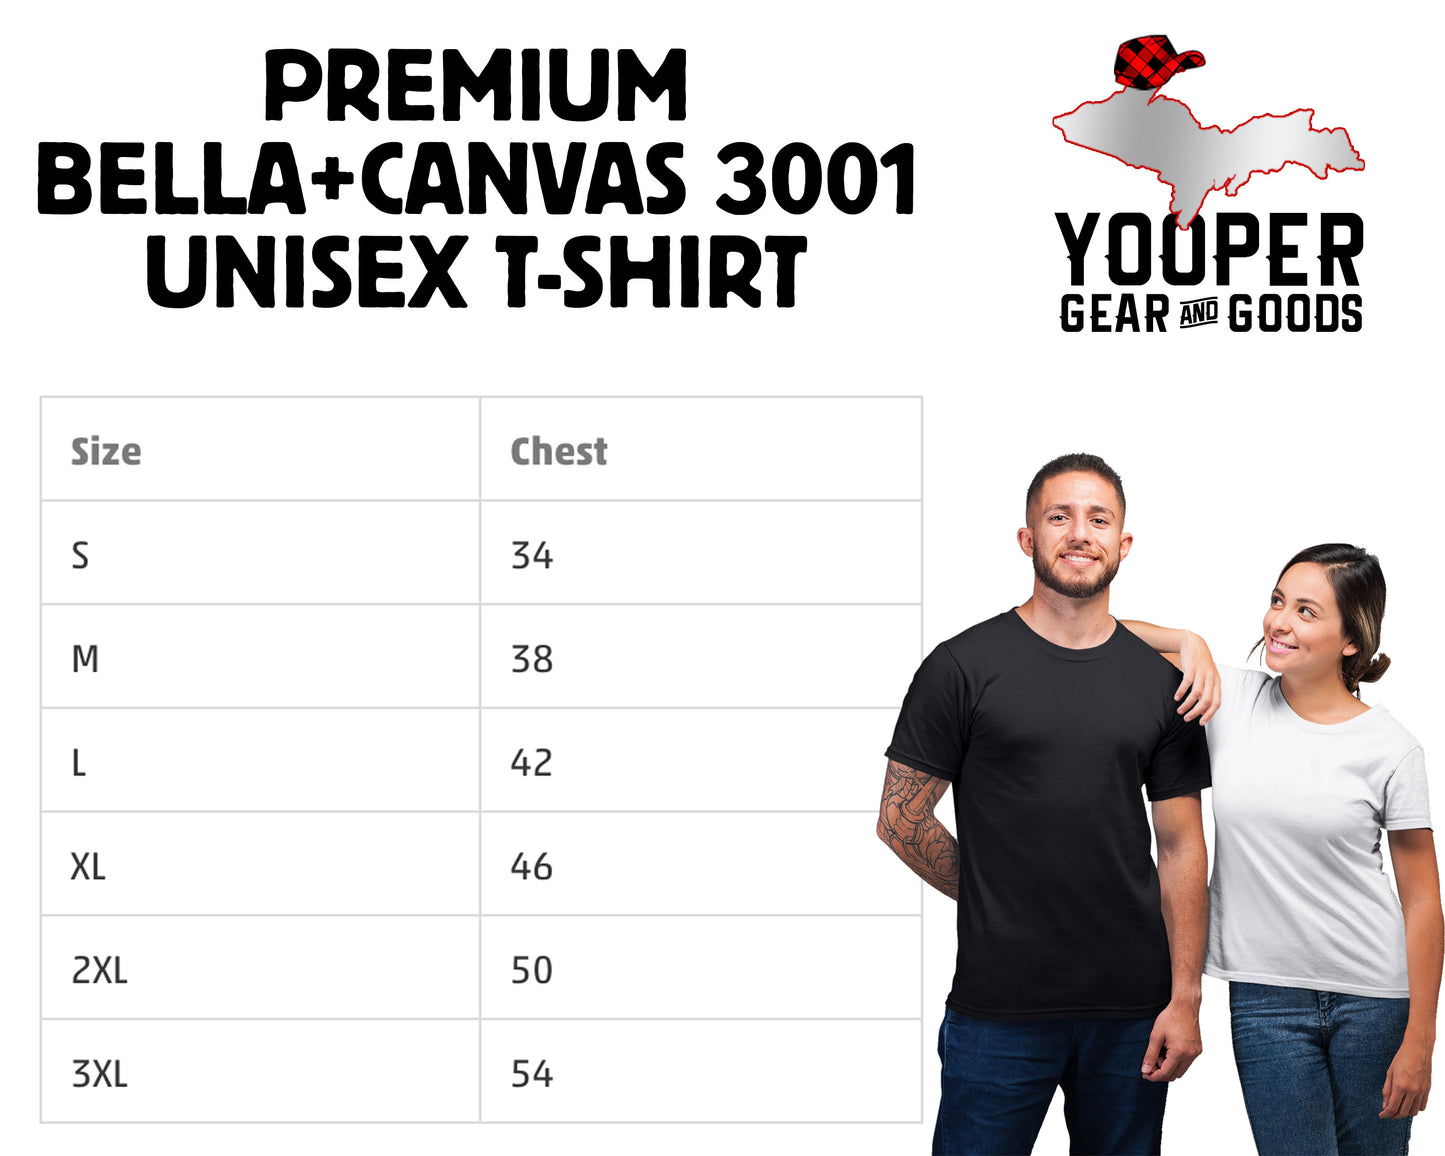 Yooper Shirt | Upper Michigan T-shirt | Yooper Gift | Yooperized